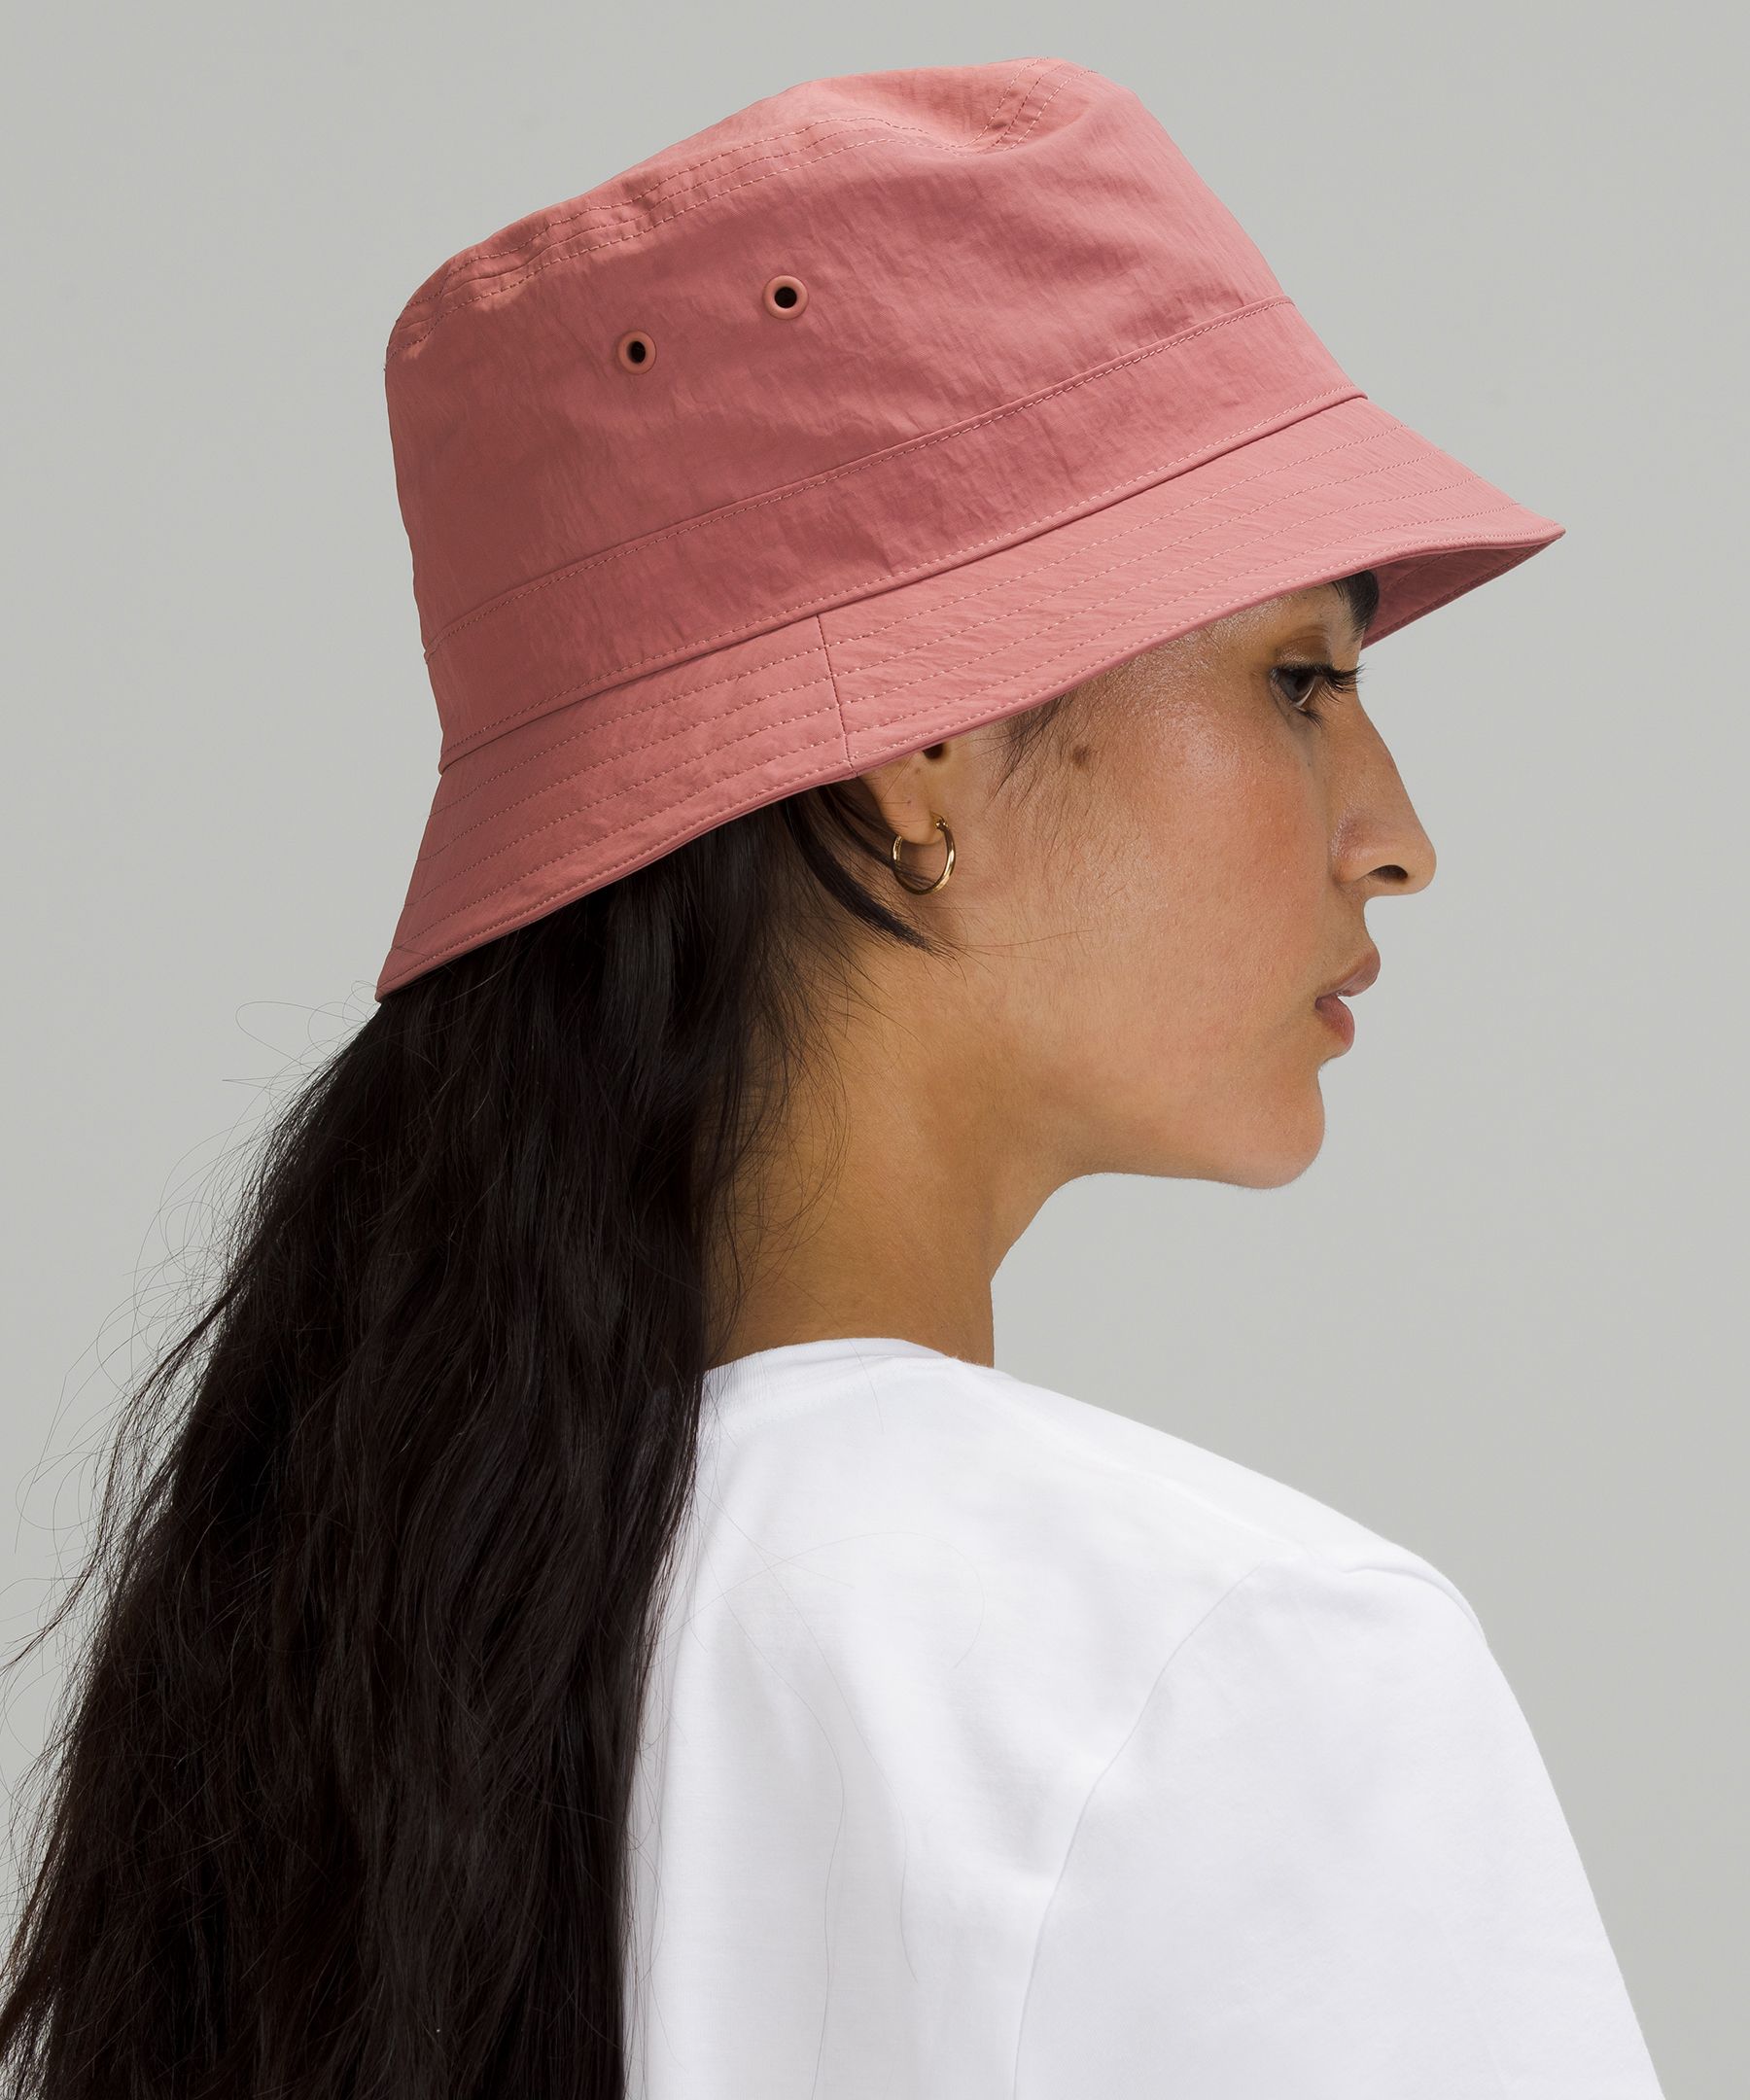 Lululemon Bucket Hat Review